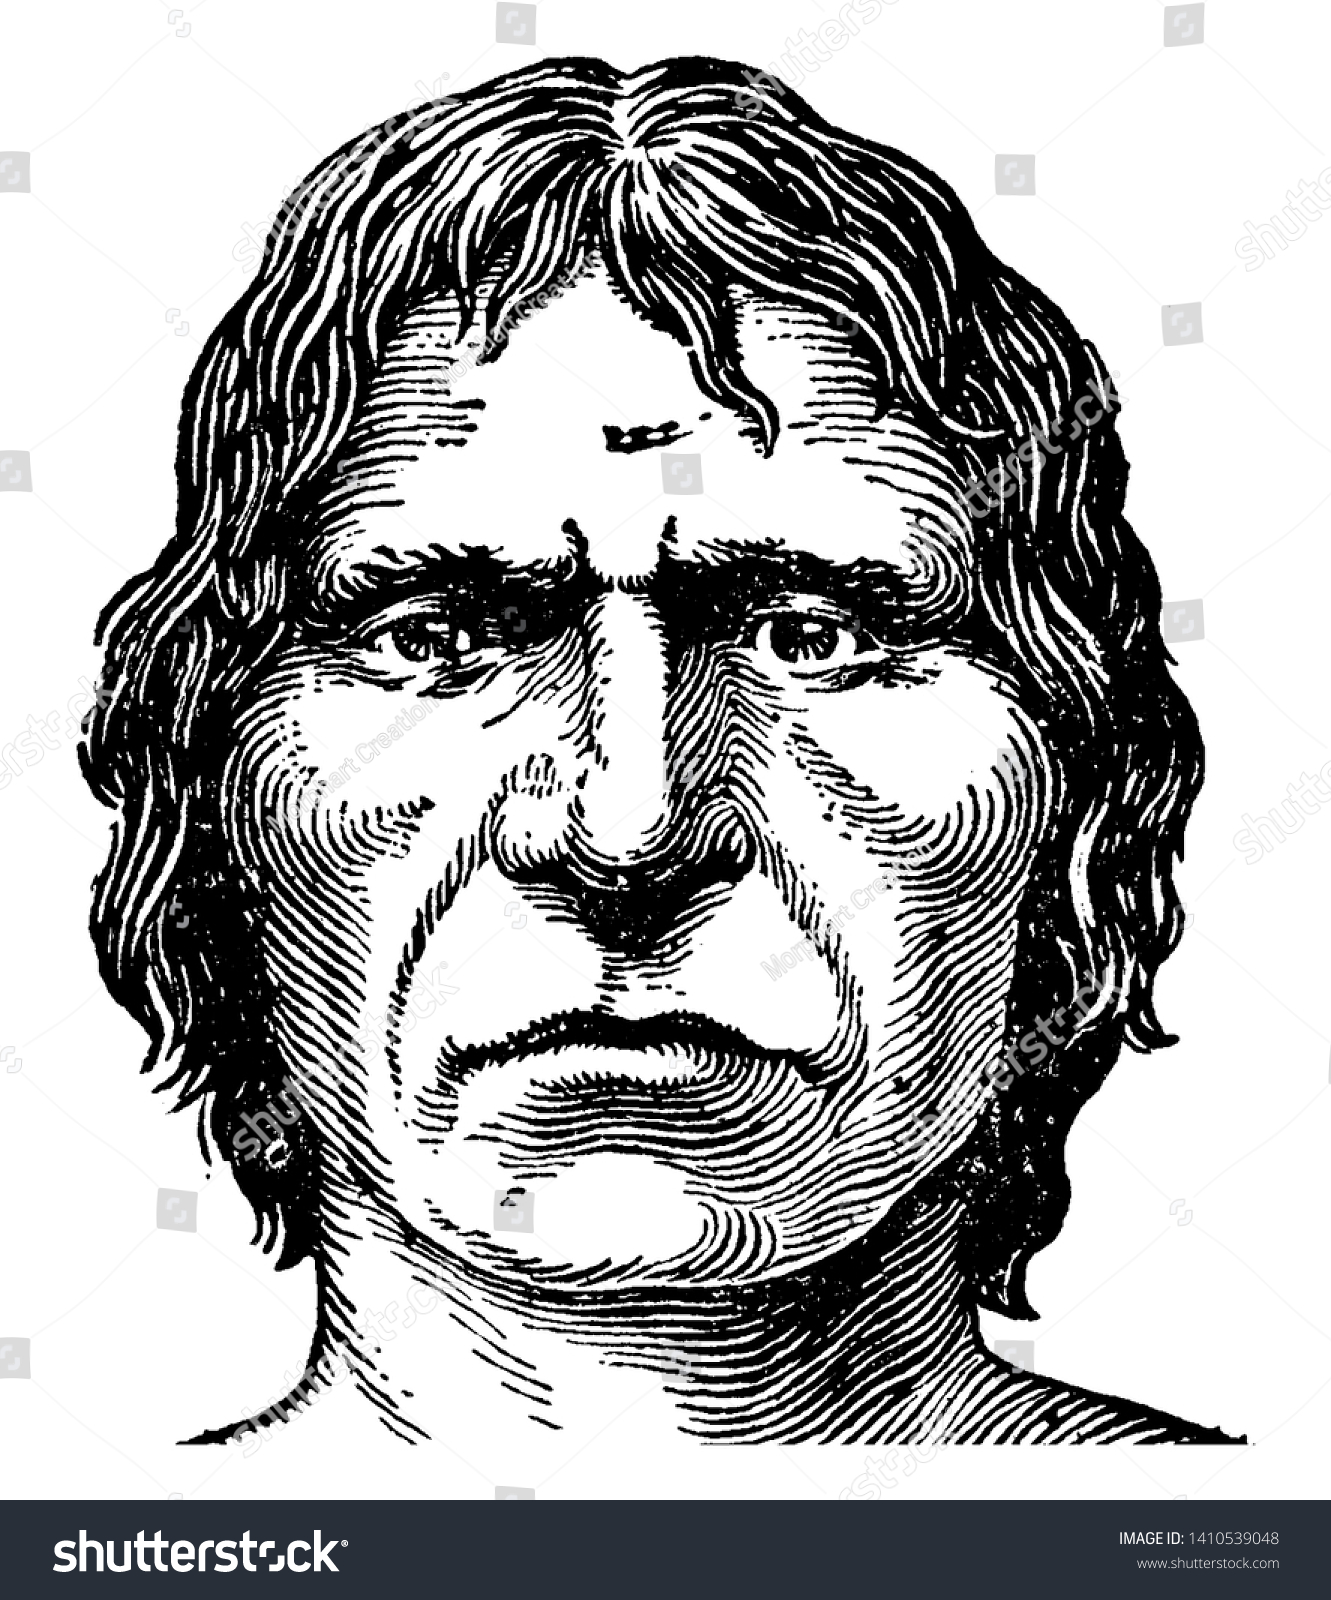 SVG of Face of Cro-Magnon man, vintage line drawing or engraving illustration svg